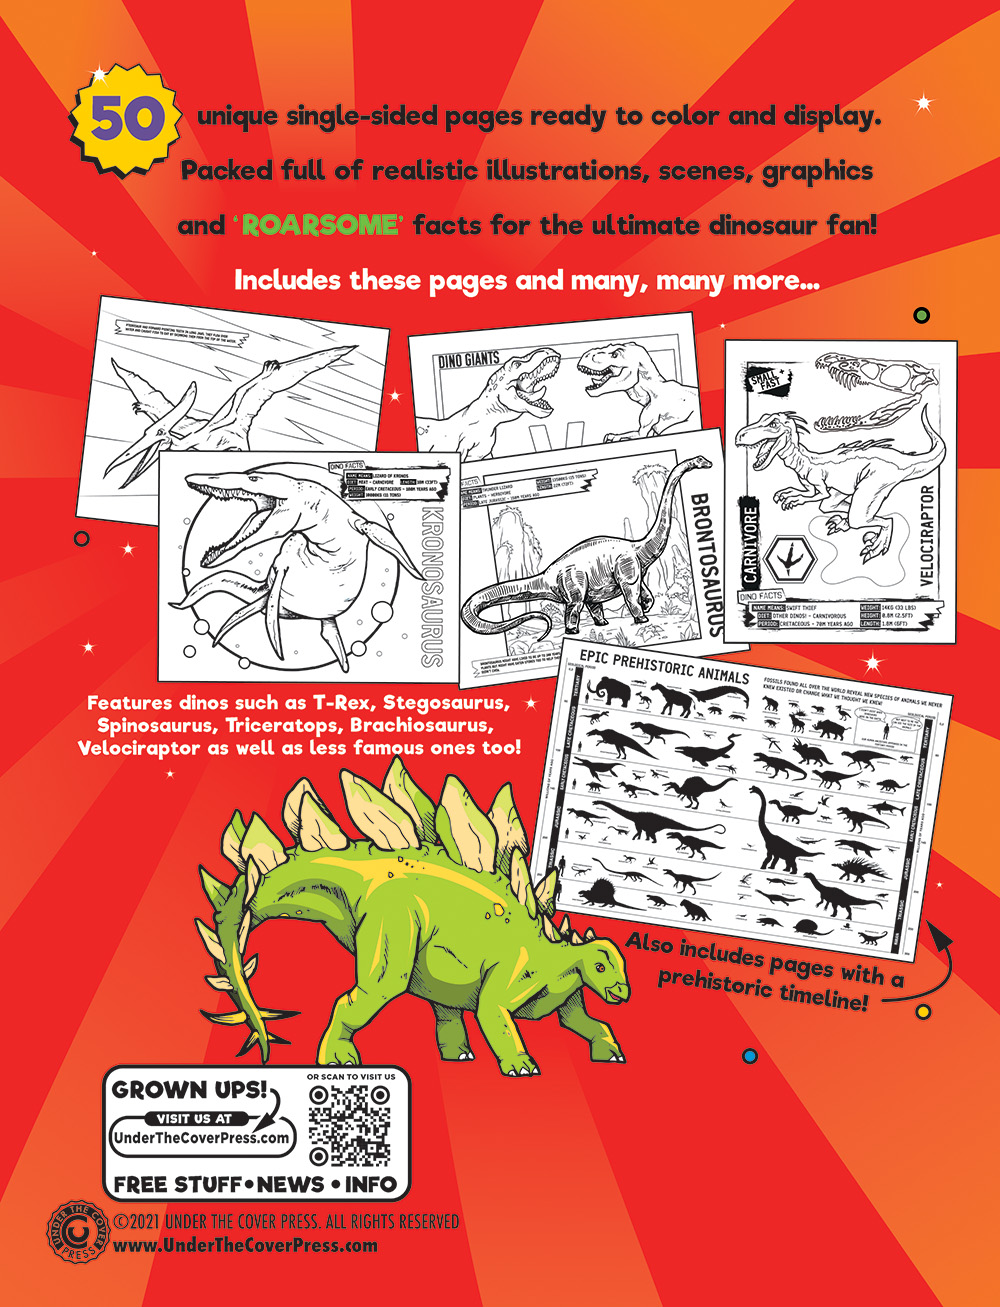 zephyrosaurus coloring page